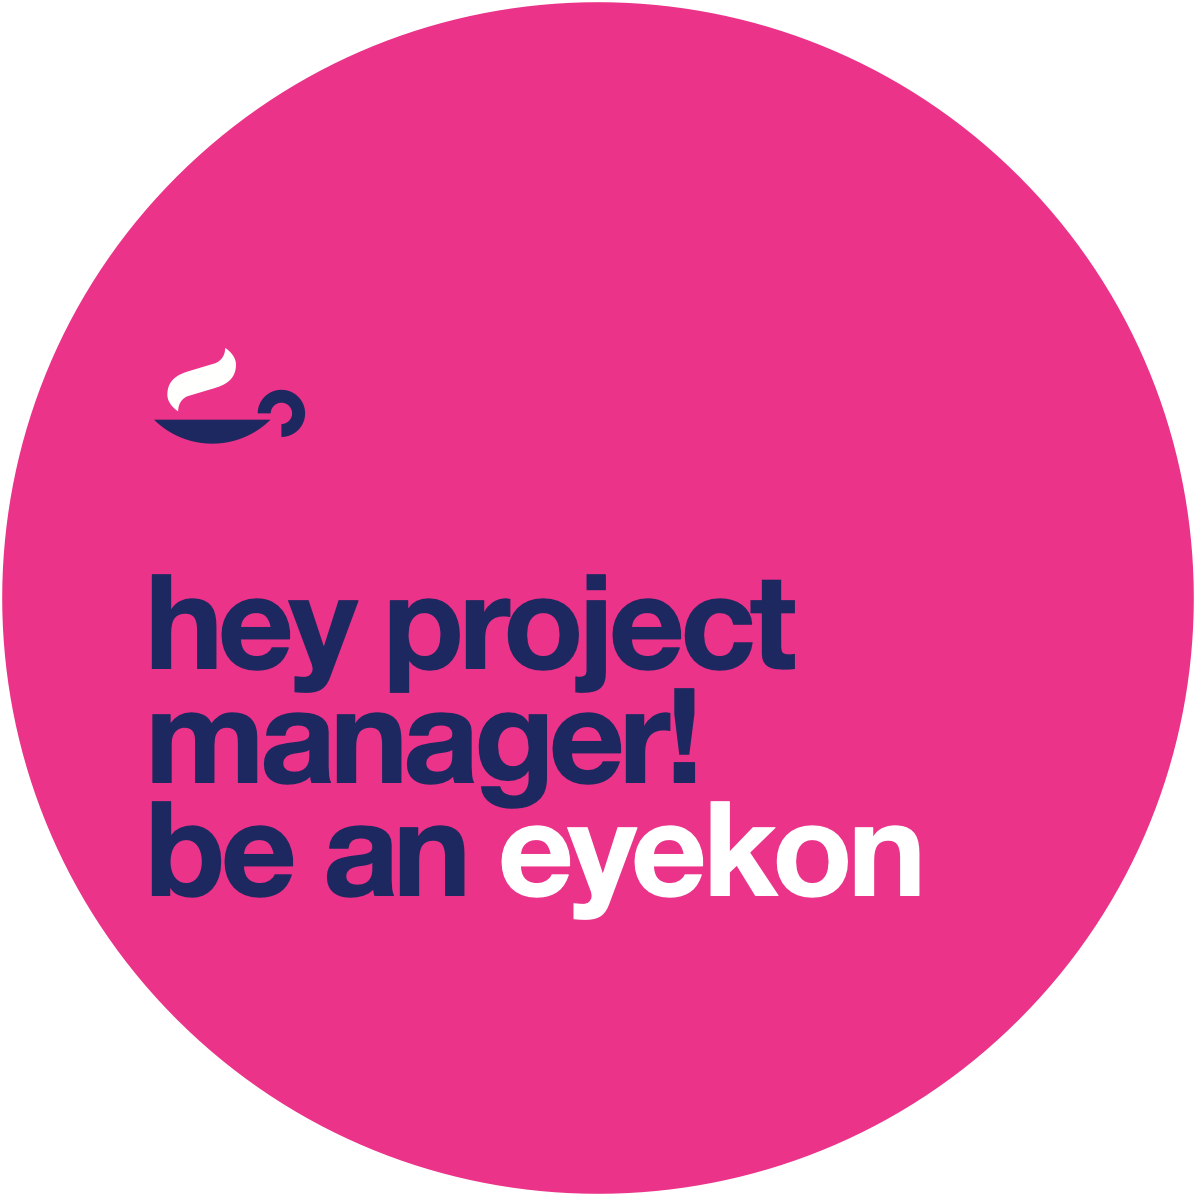 hey consultant! be an eyekon